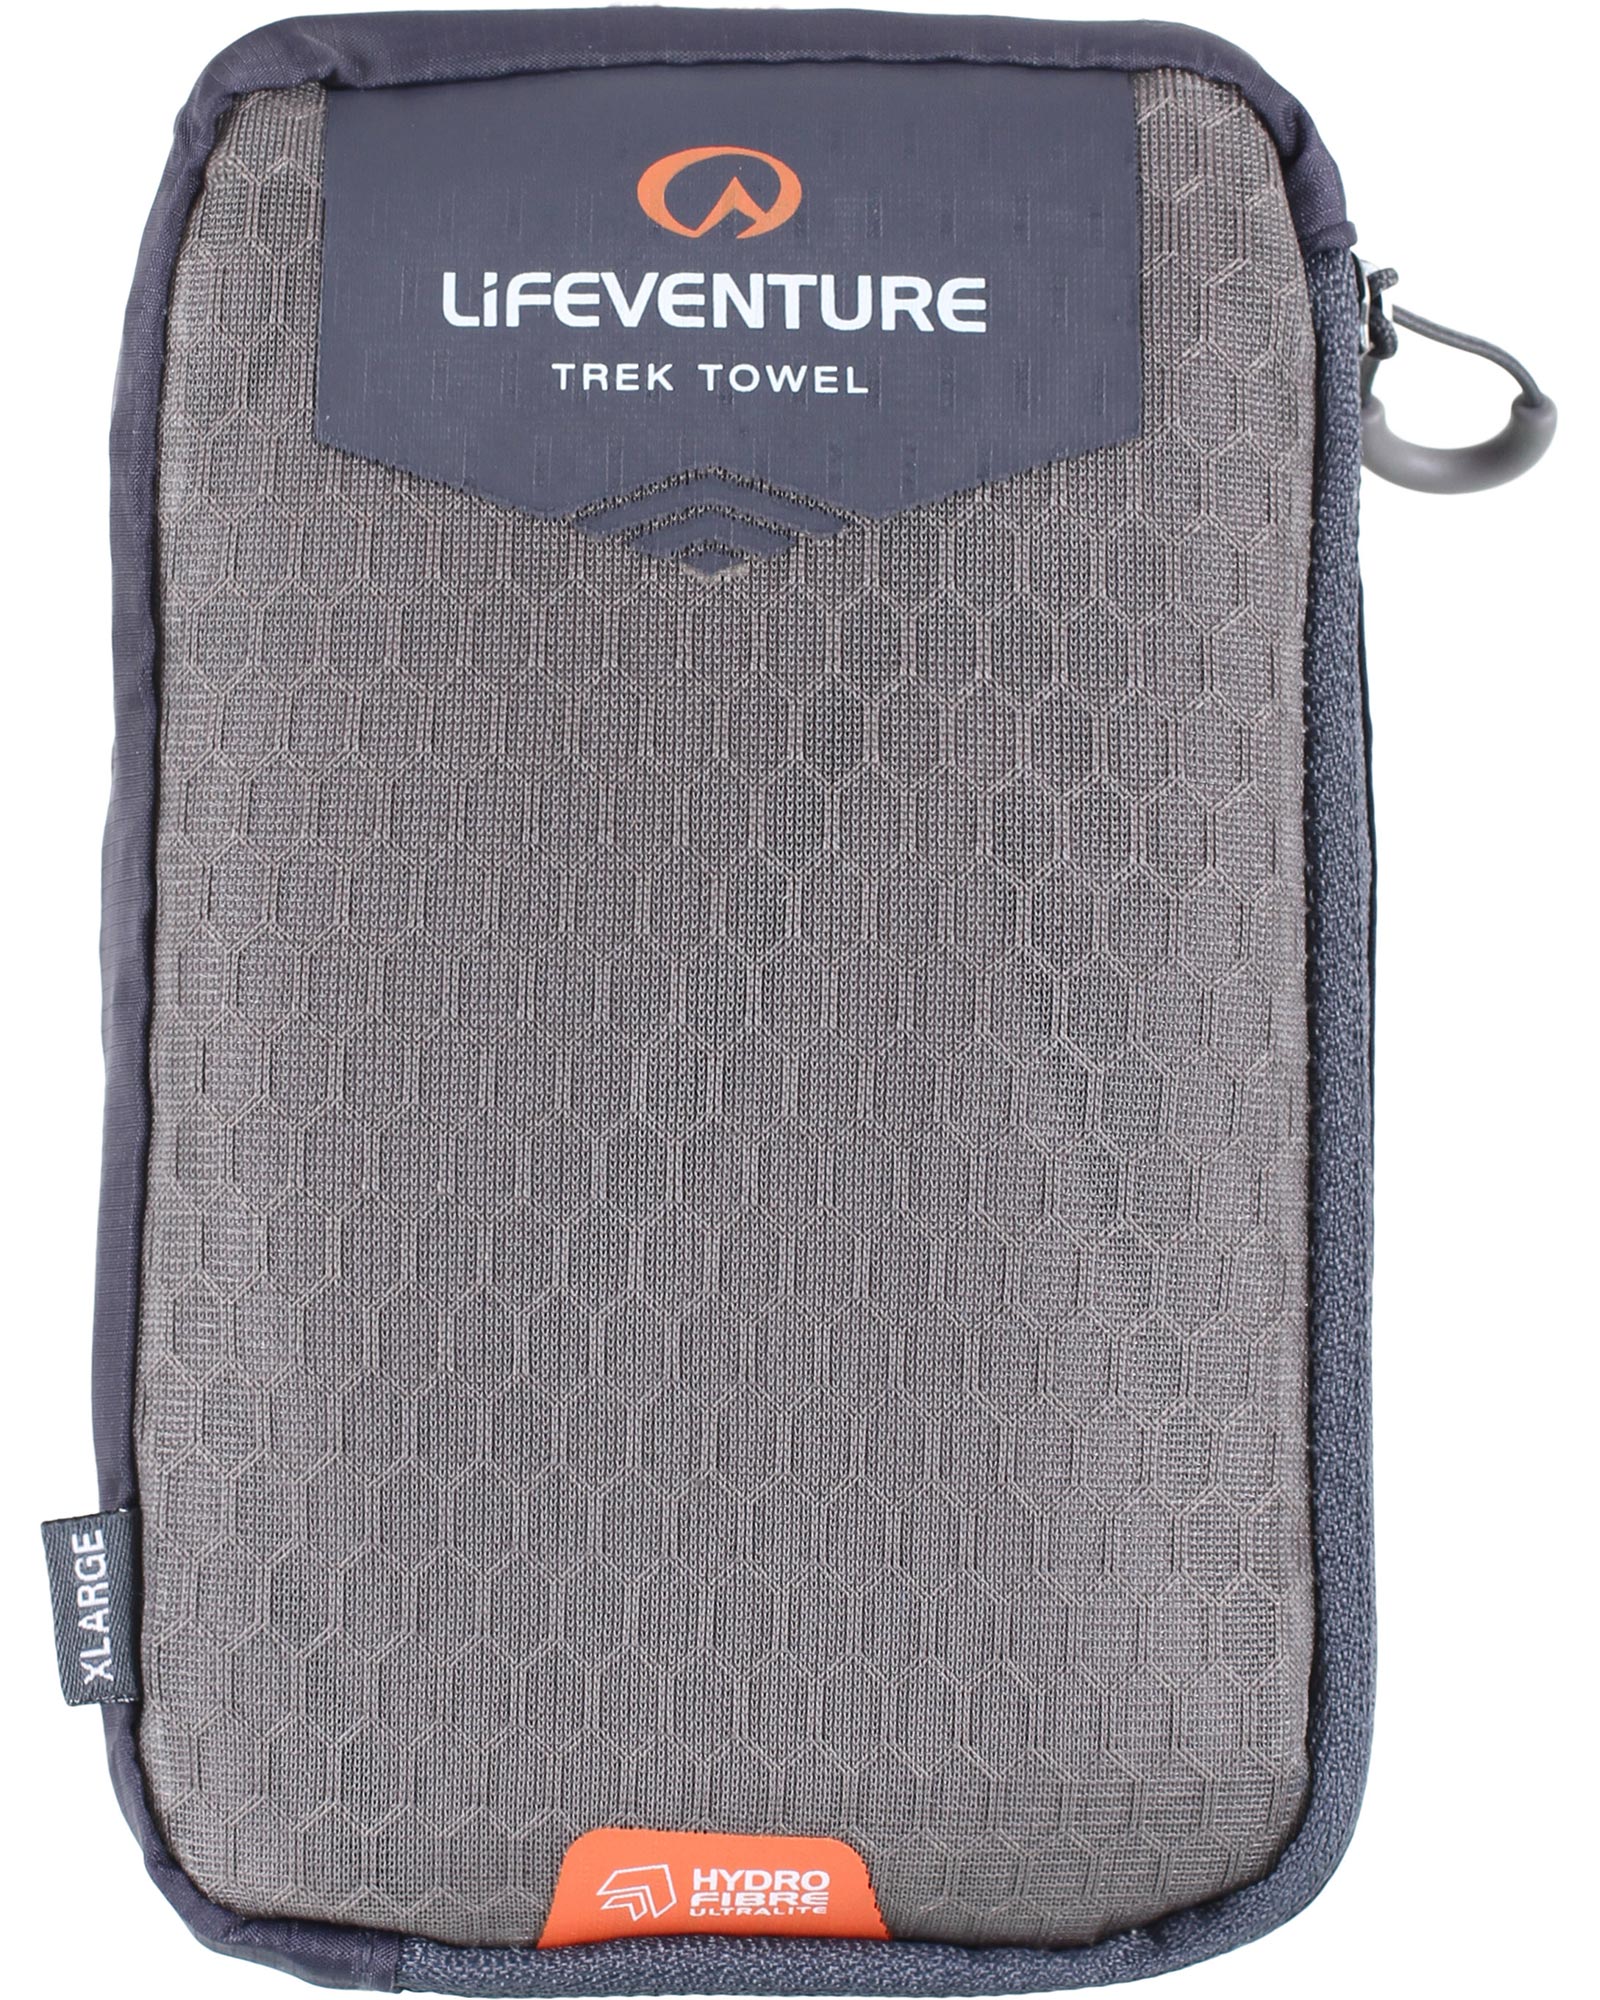 Lifeventure Hydrofibre Trek Towel - X Large